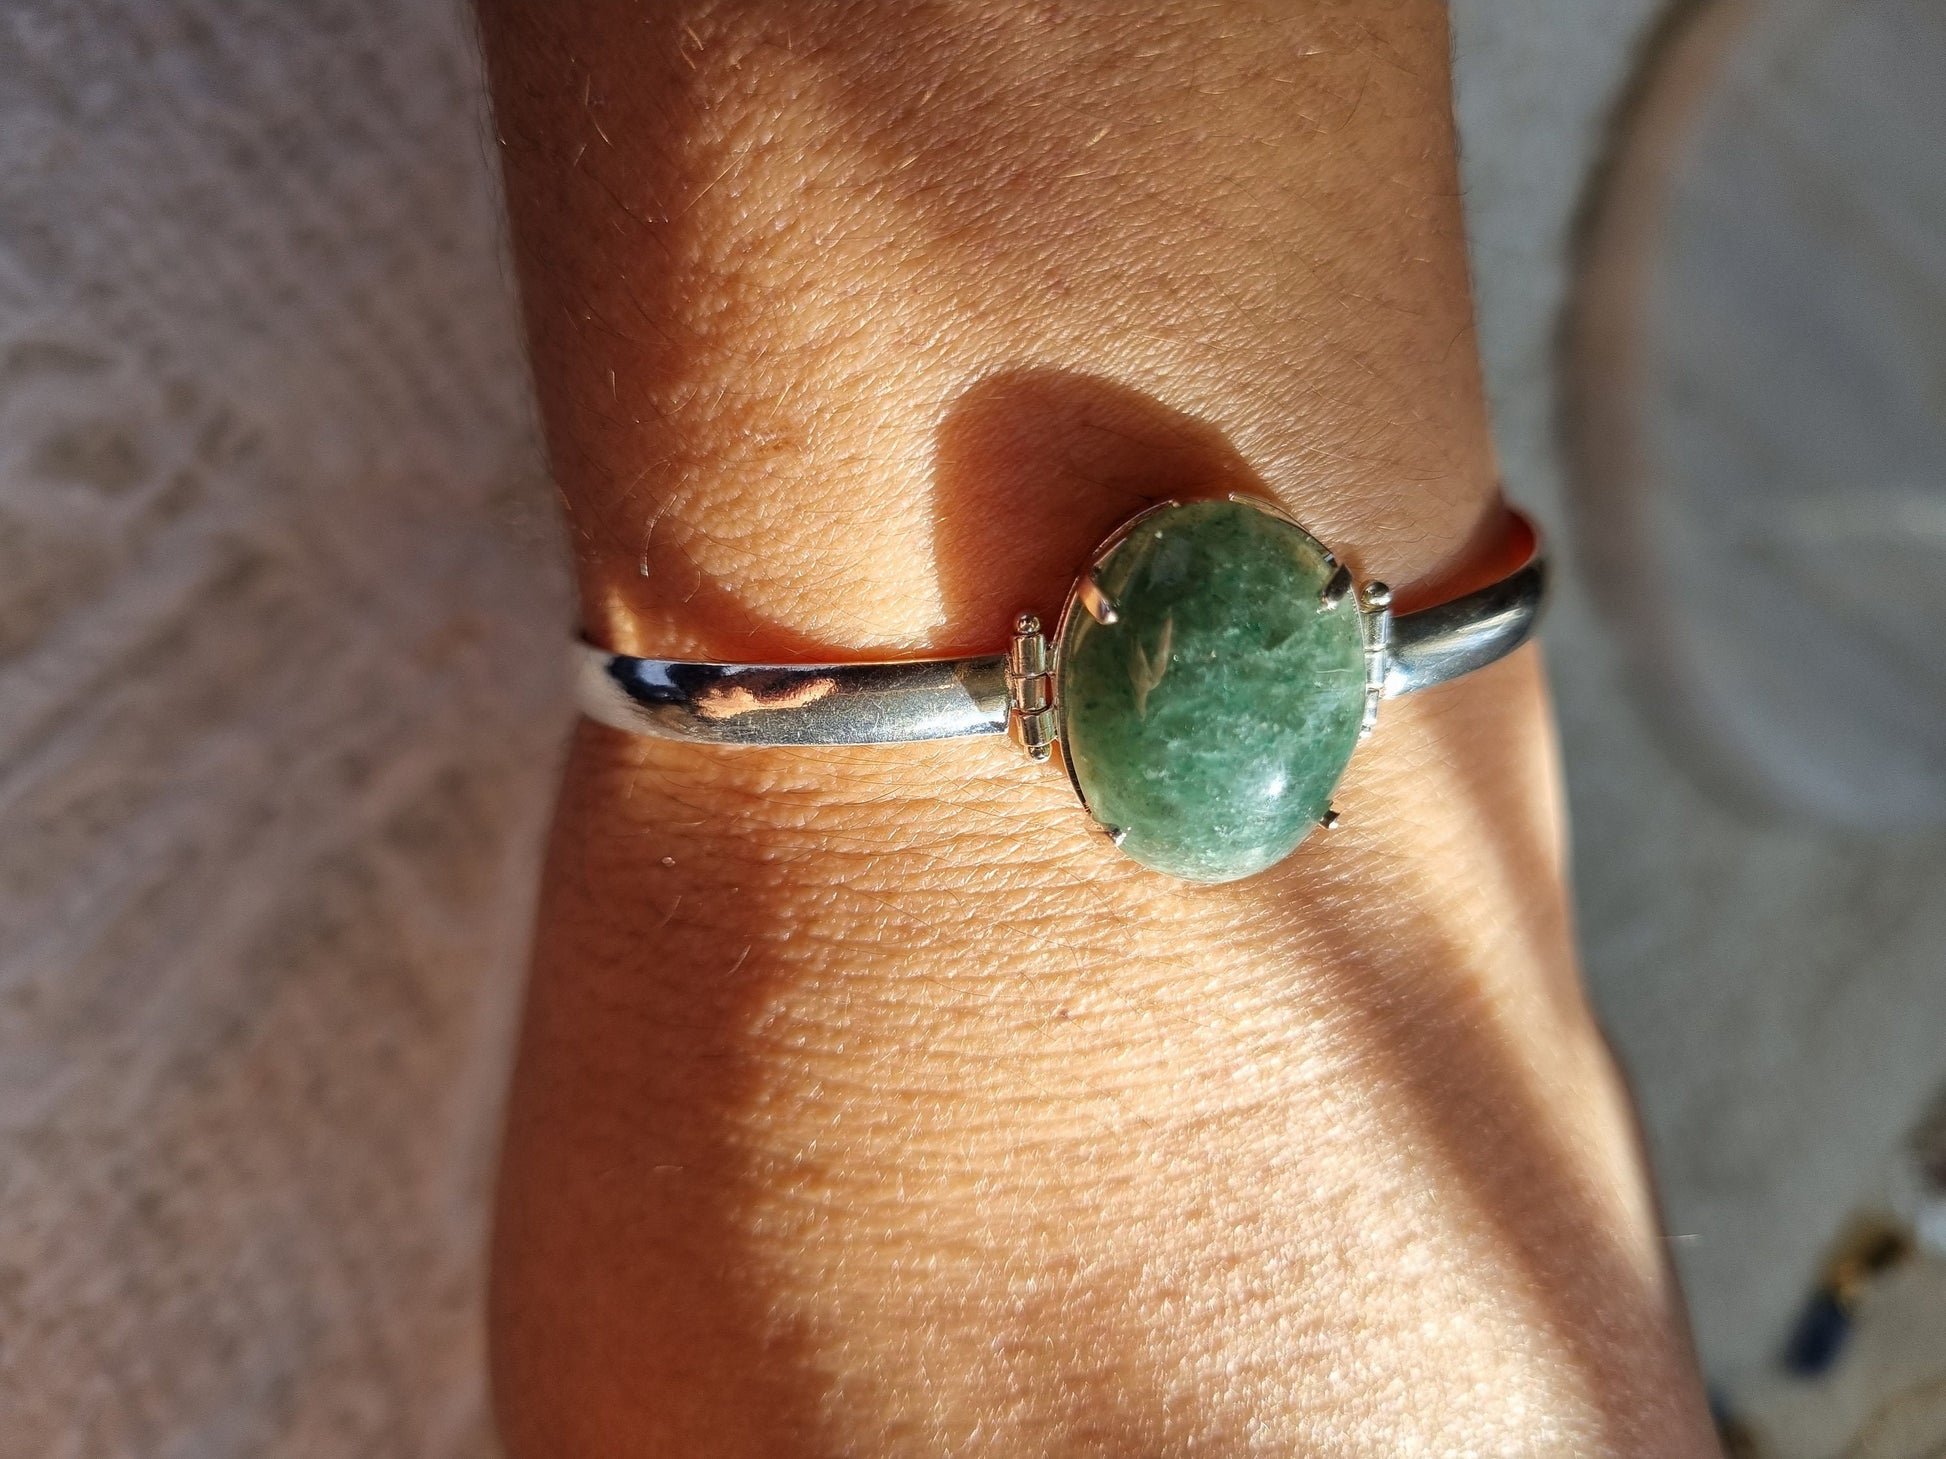 Green Aventurine Oval shaped Silver Bracelet - Universal Fate